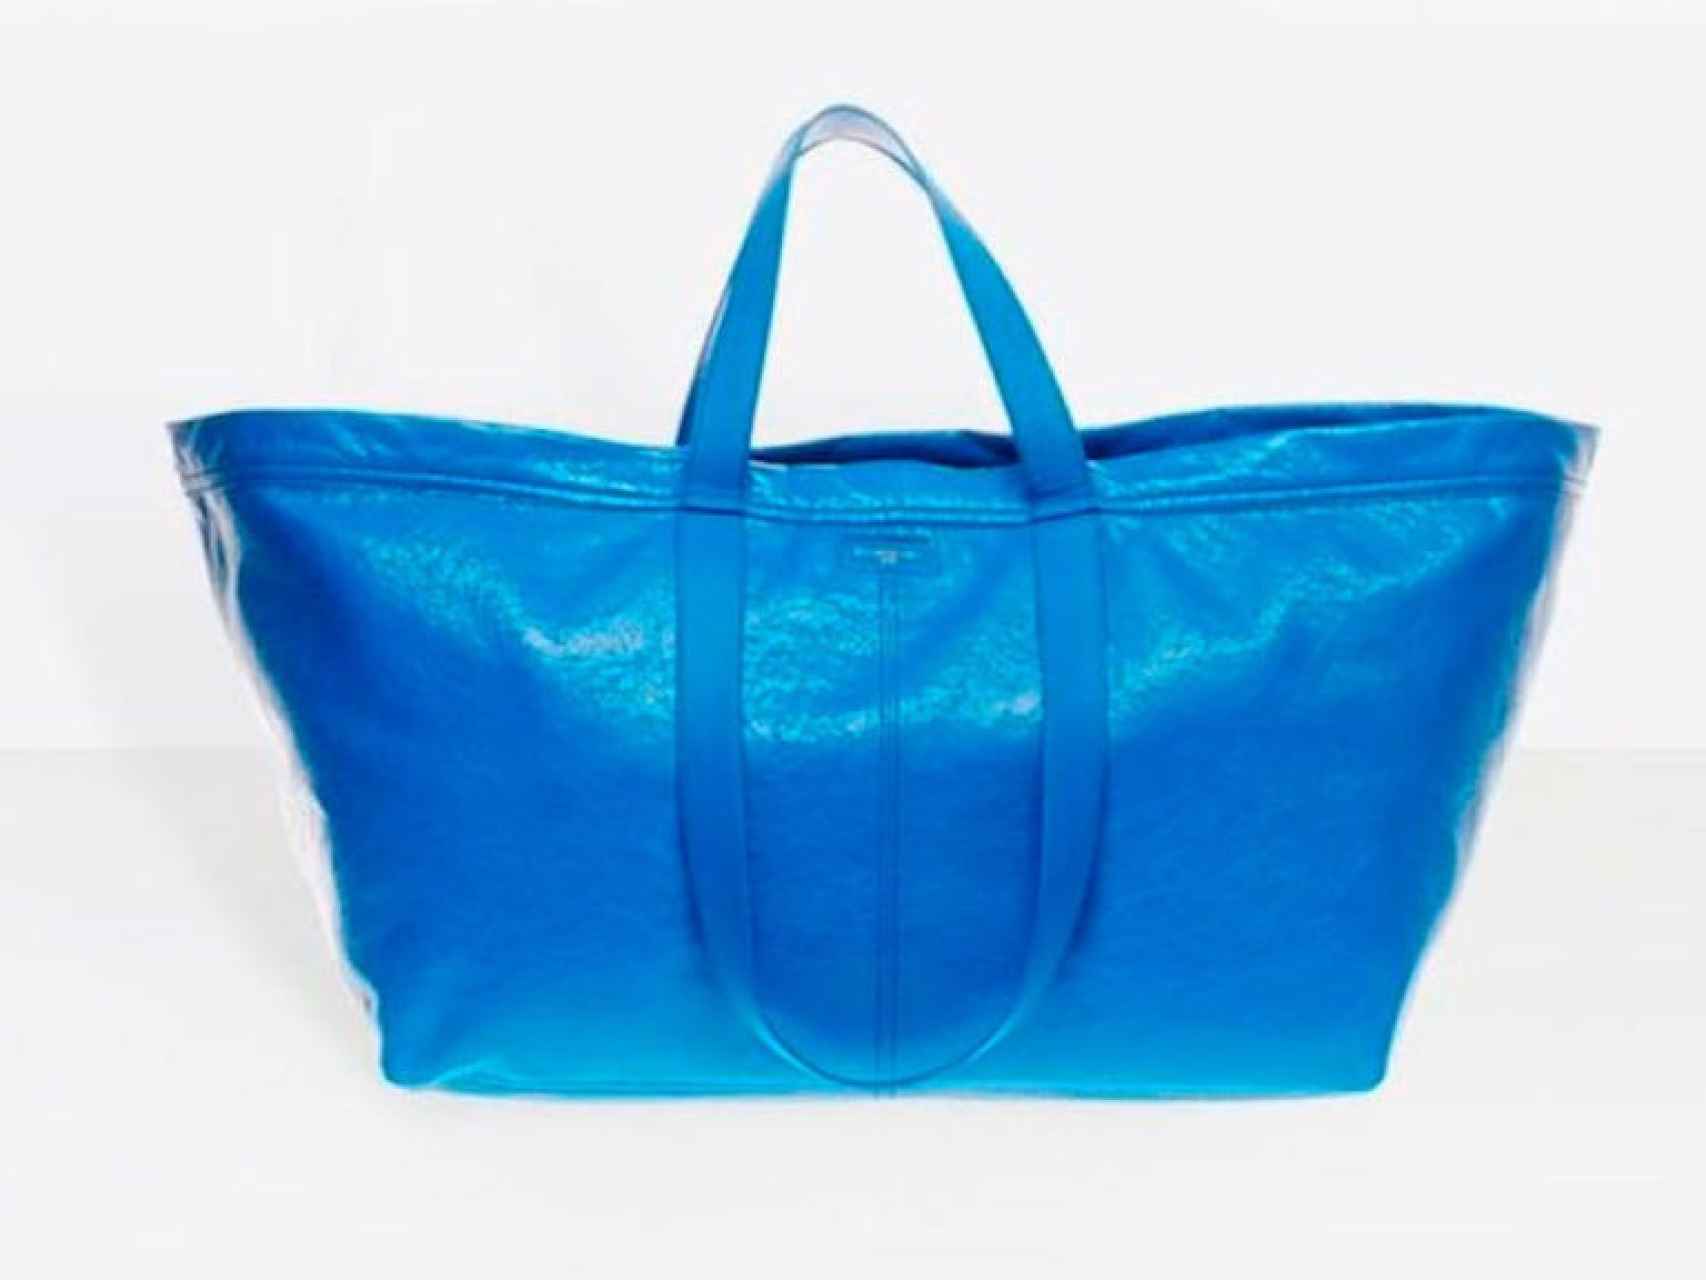 El bolso de Balenciaga que causó polémica por su parecido a la bolsa de Ikea.